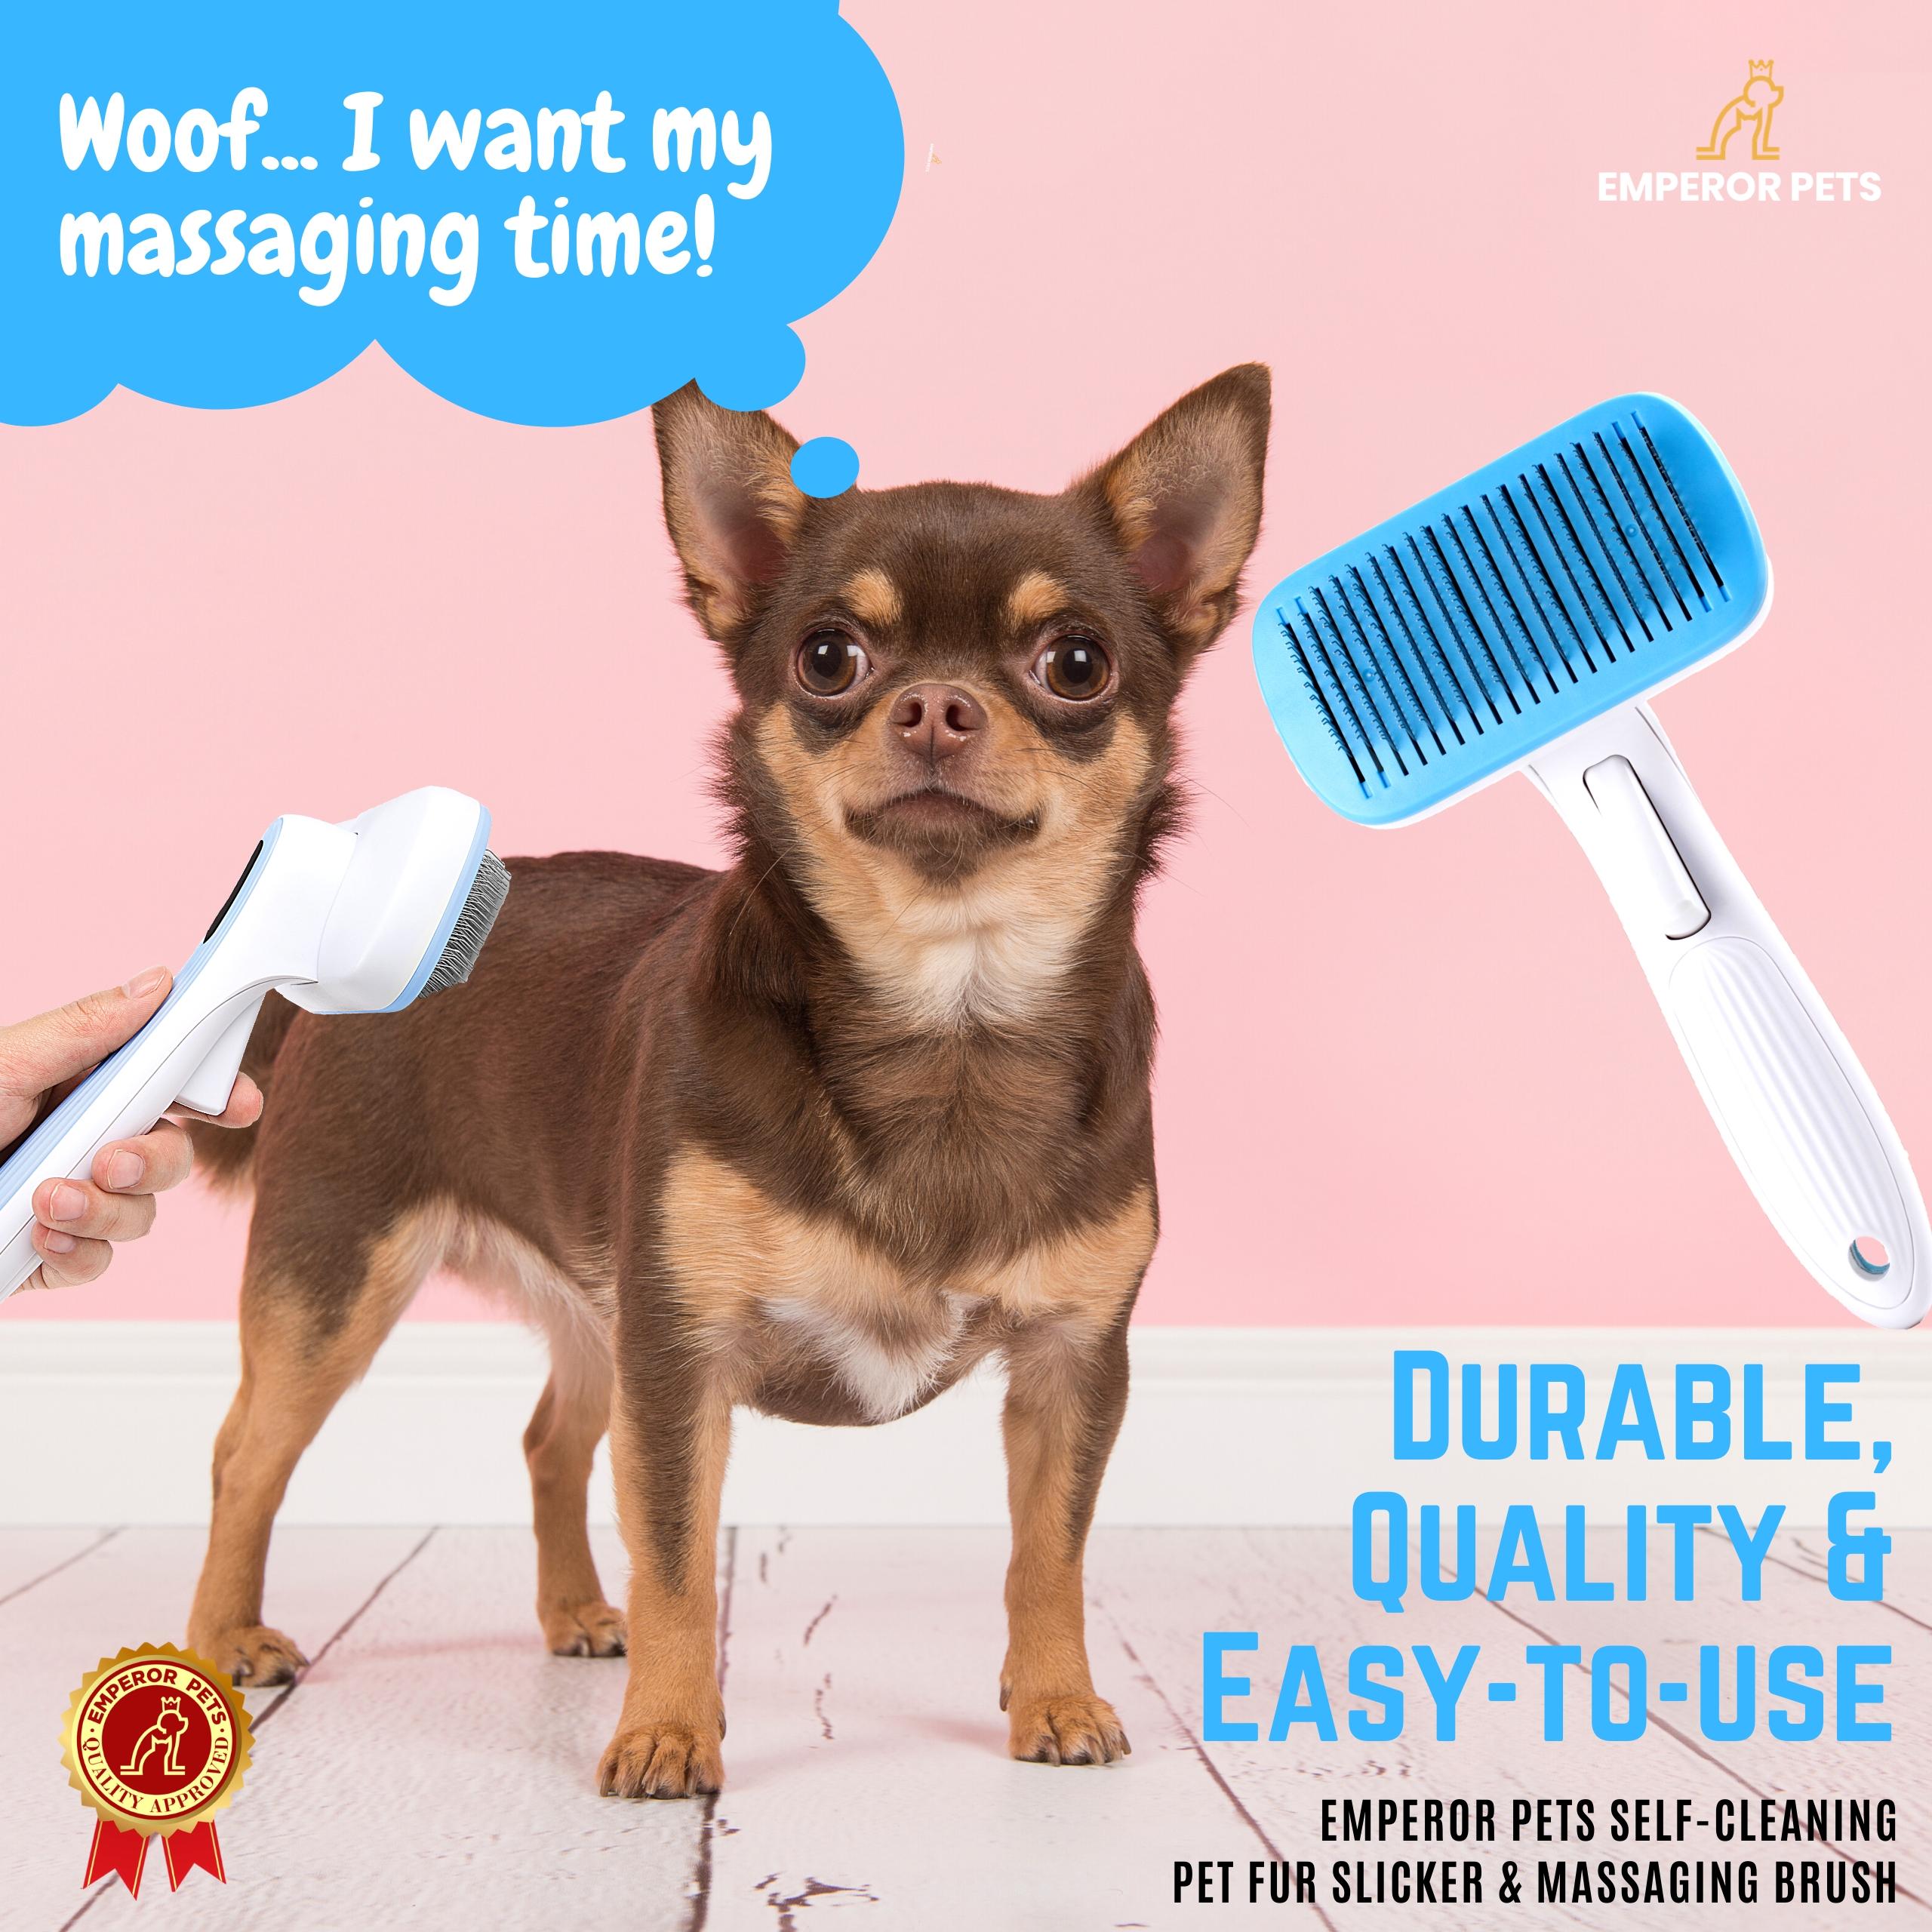 Emperor Pets Self Cleaning Pet Fur Slicker Brush for Long Fur Pets, Dog Brush, Cat Brush, Blue Color - Image 8 Photography